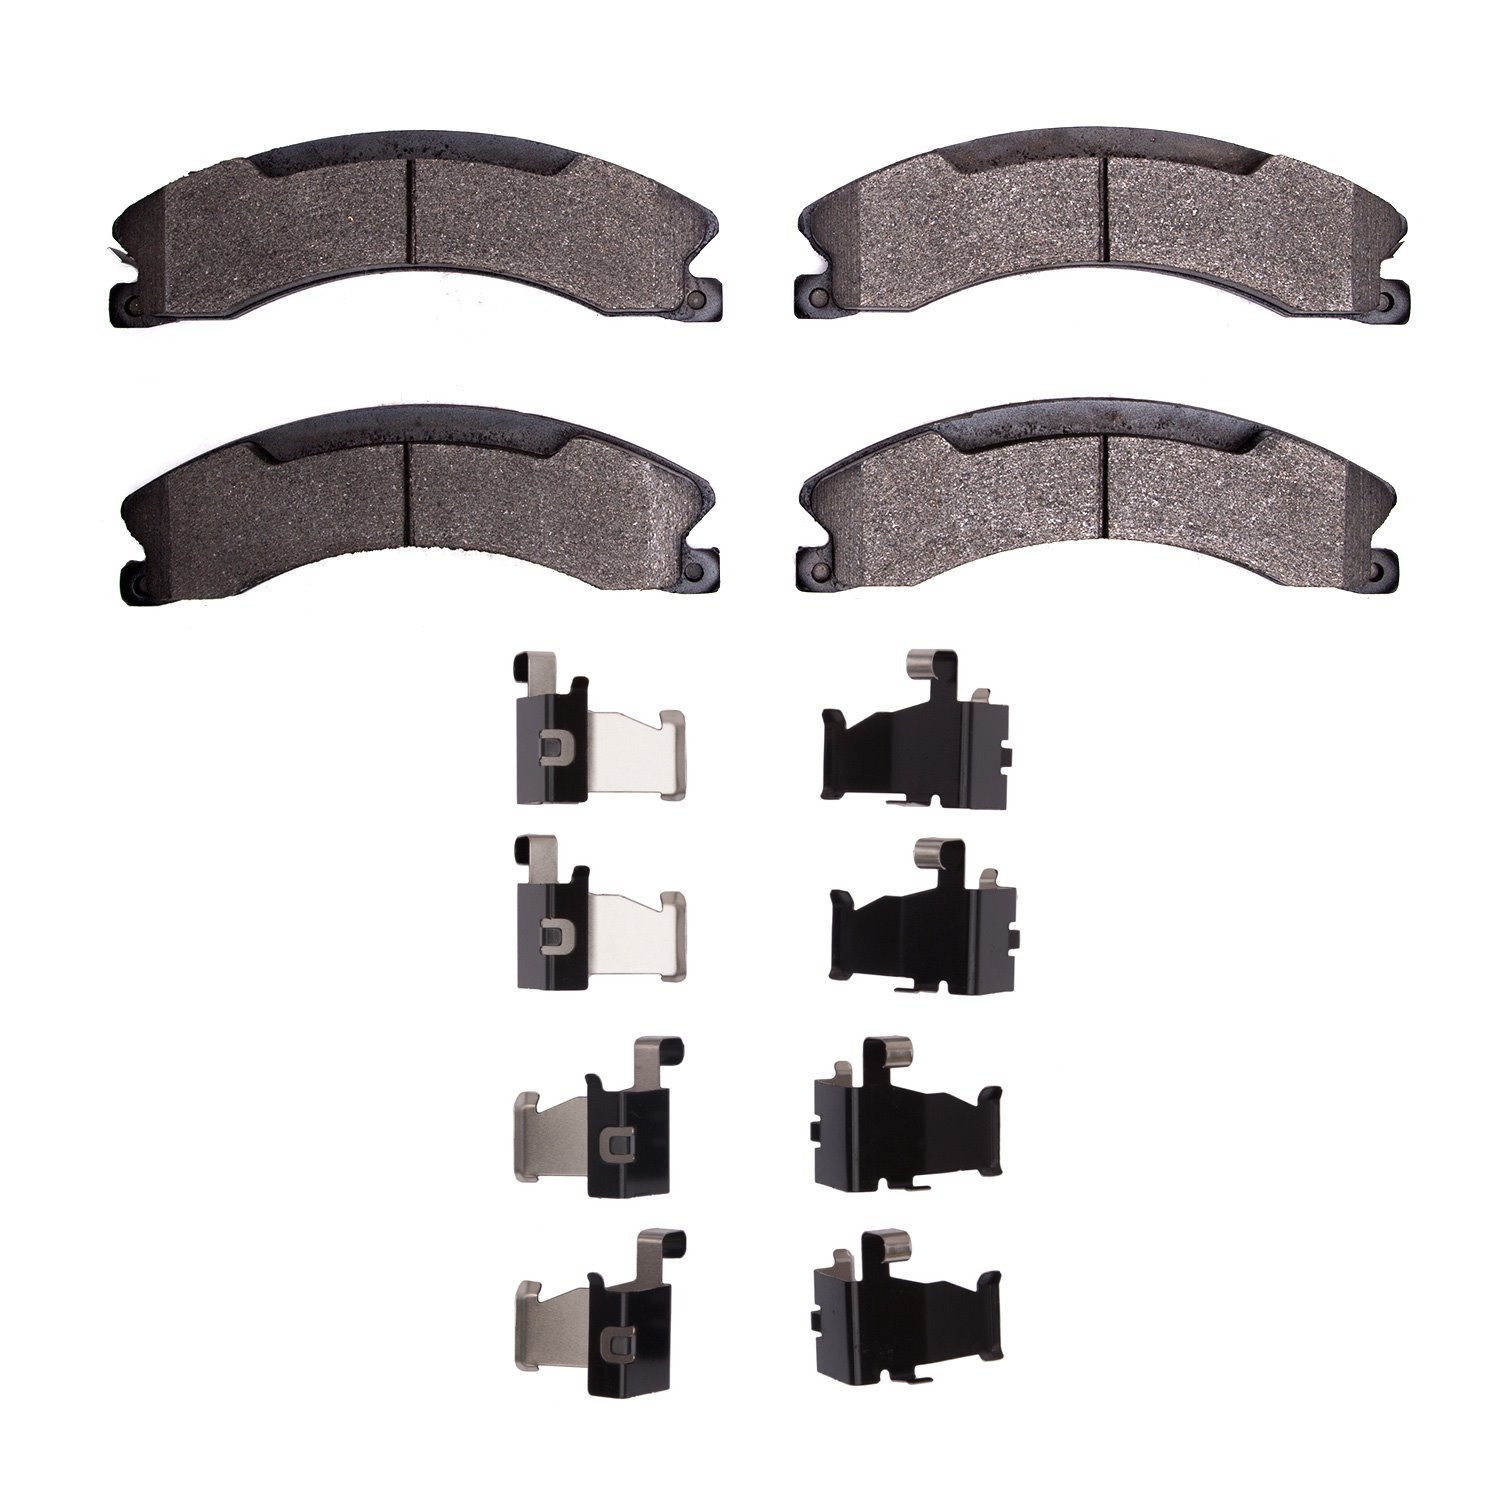 1214-1565-01 Heavy-Duty Brake Pads & Hardware Kit, Fits Select Multiple Makes/Models, Position: Front,Fr,Rear,Rr